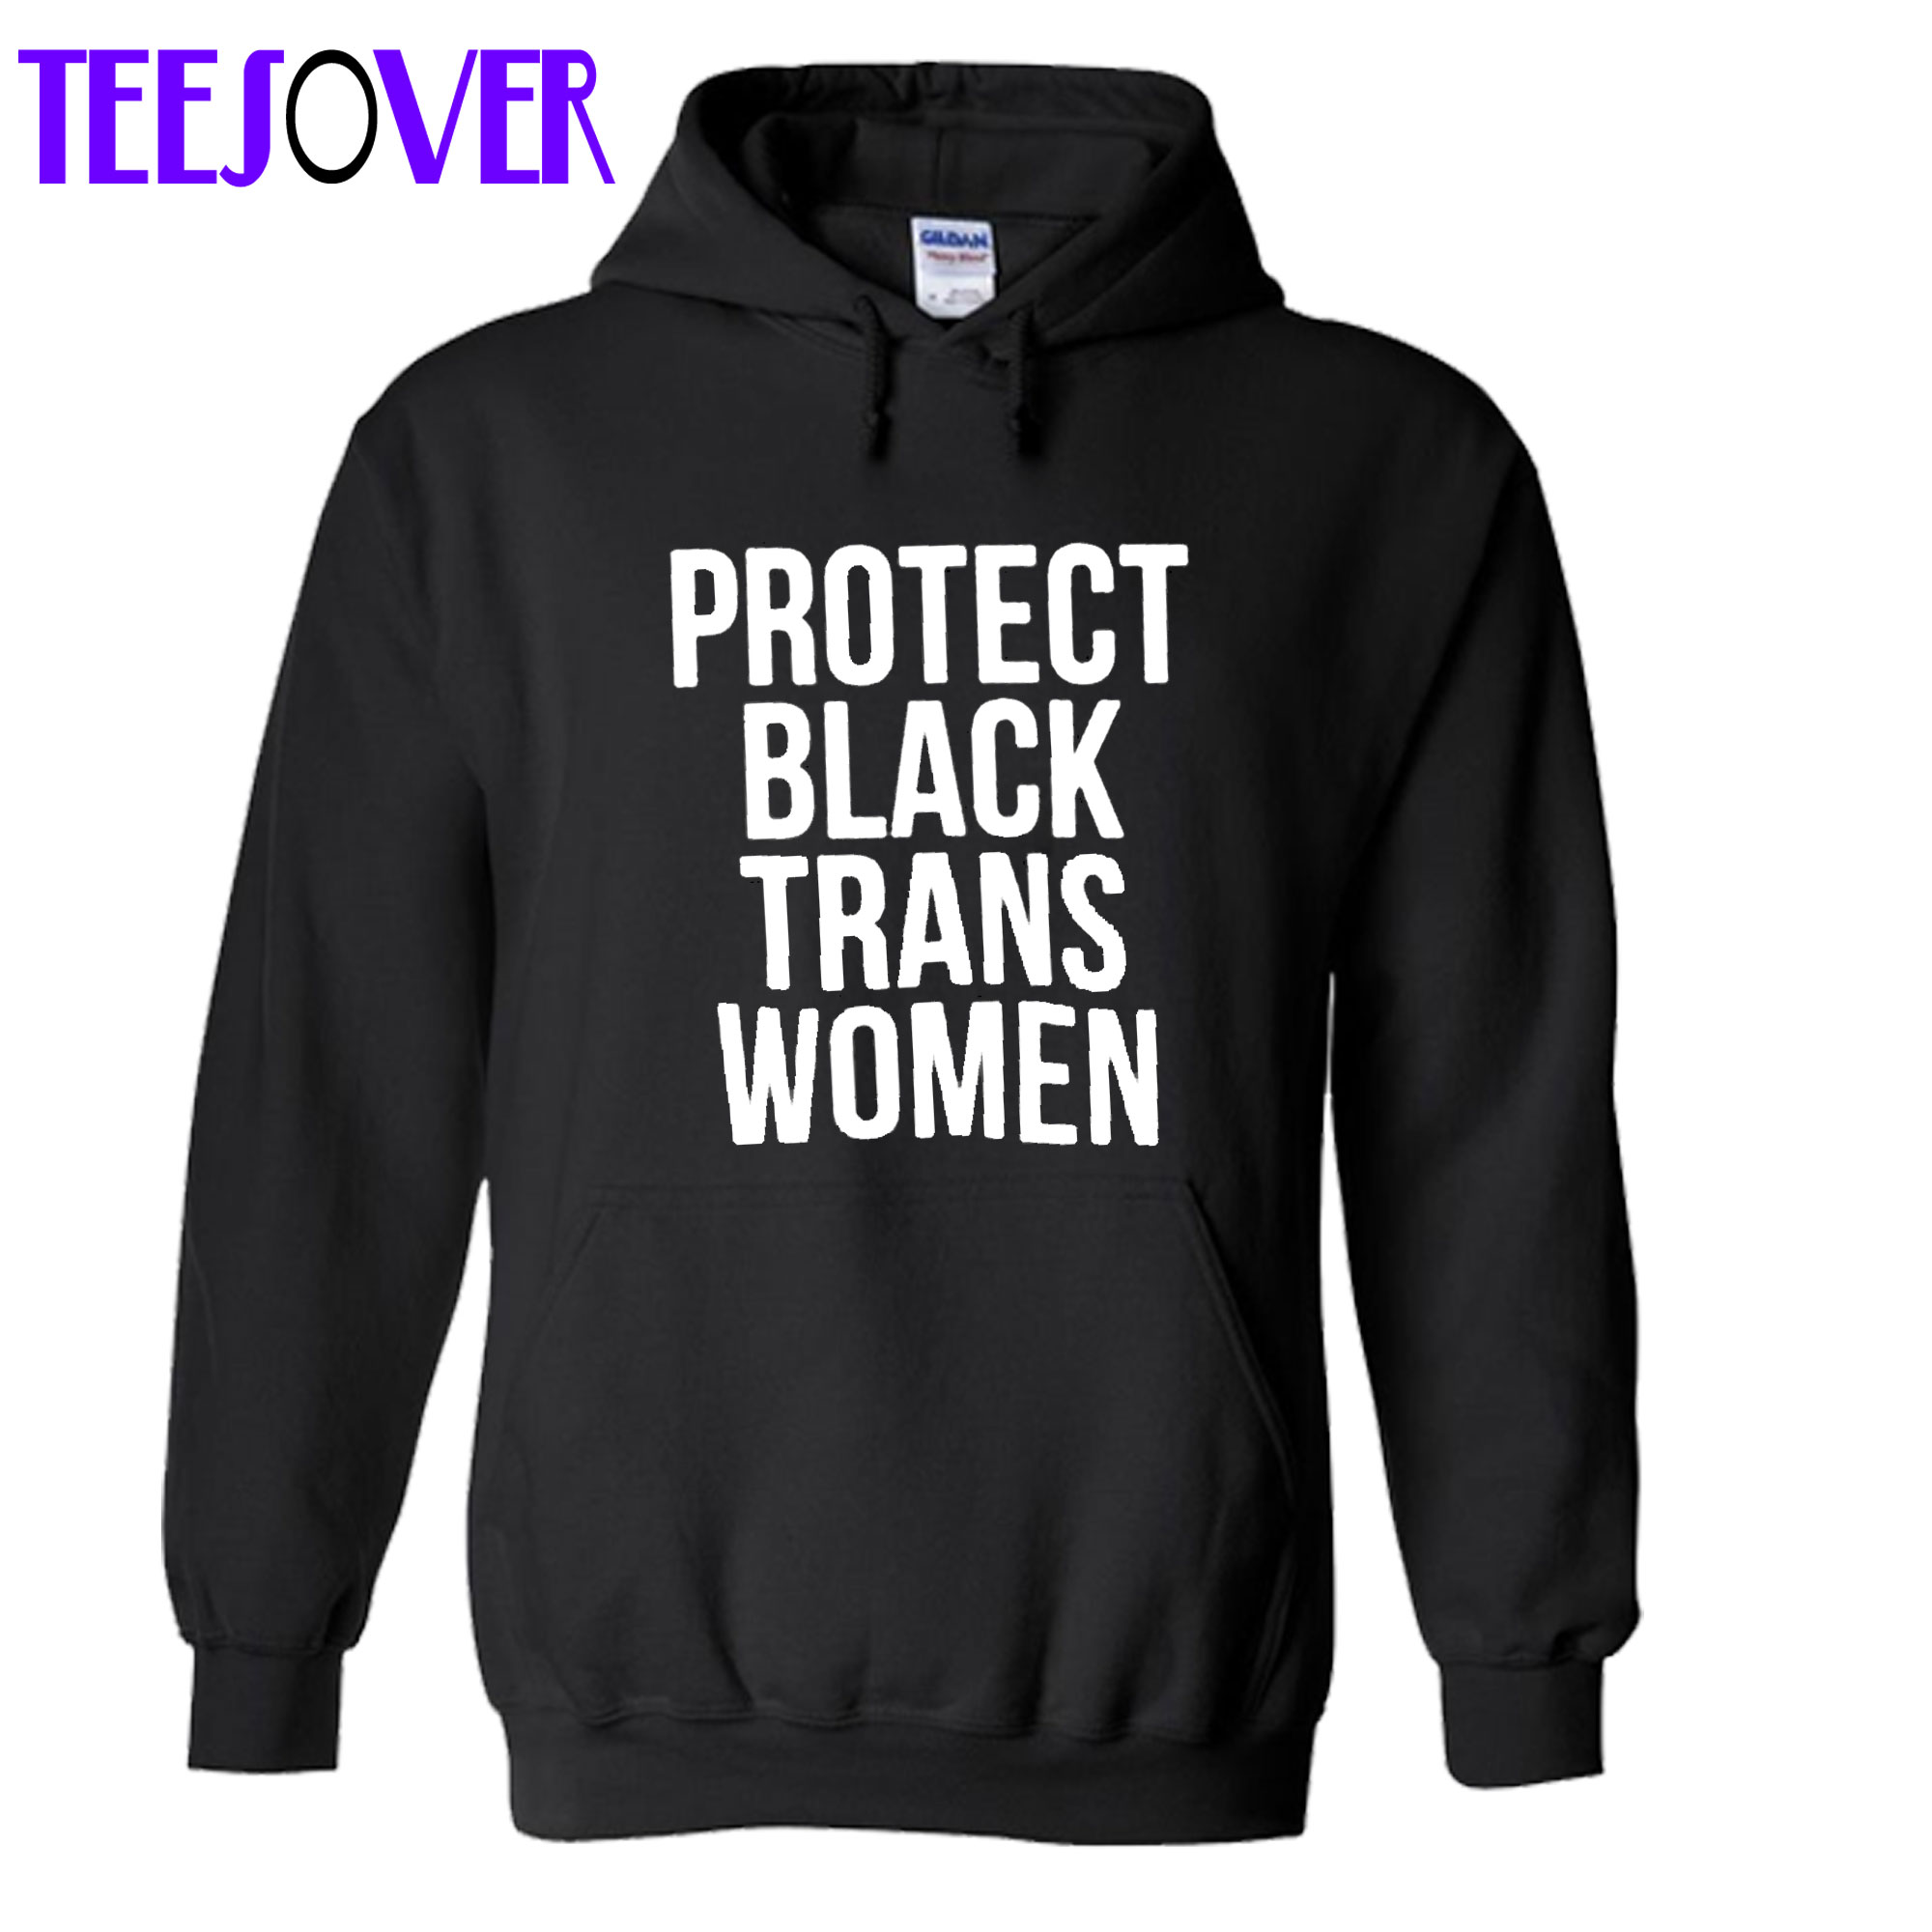 Protect Black Trans Women Hoodie